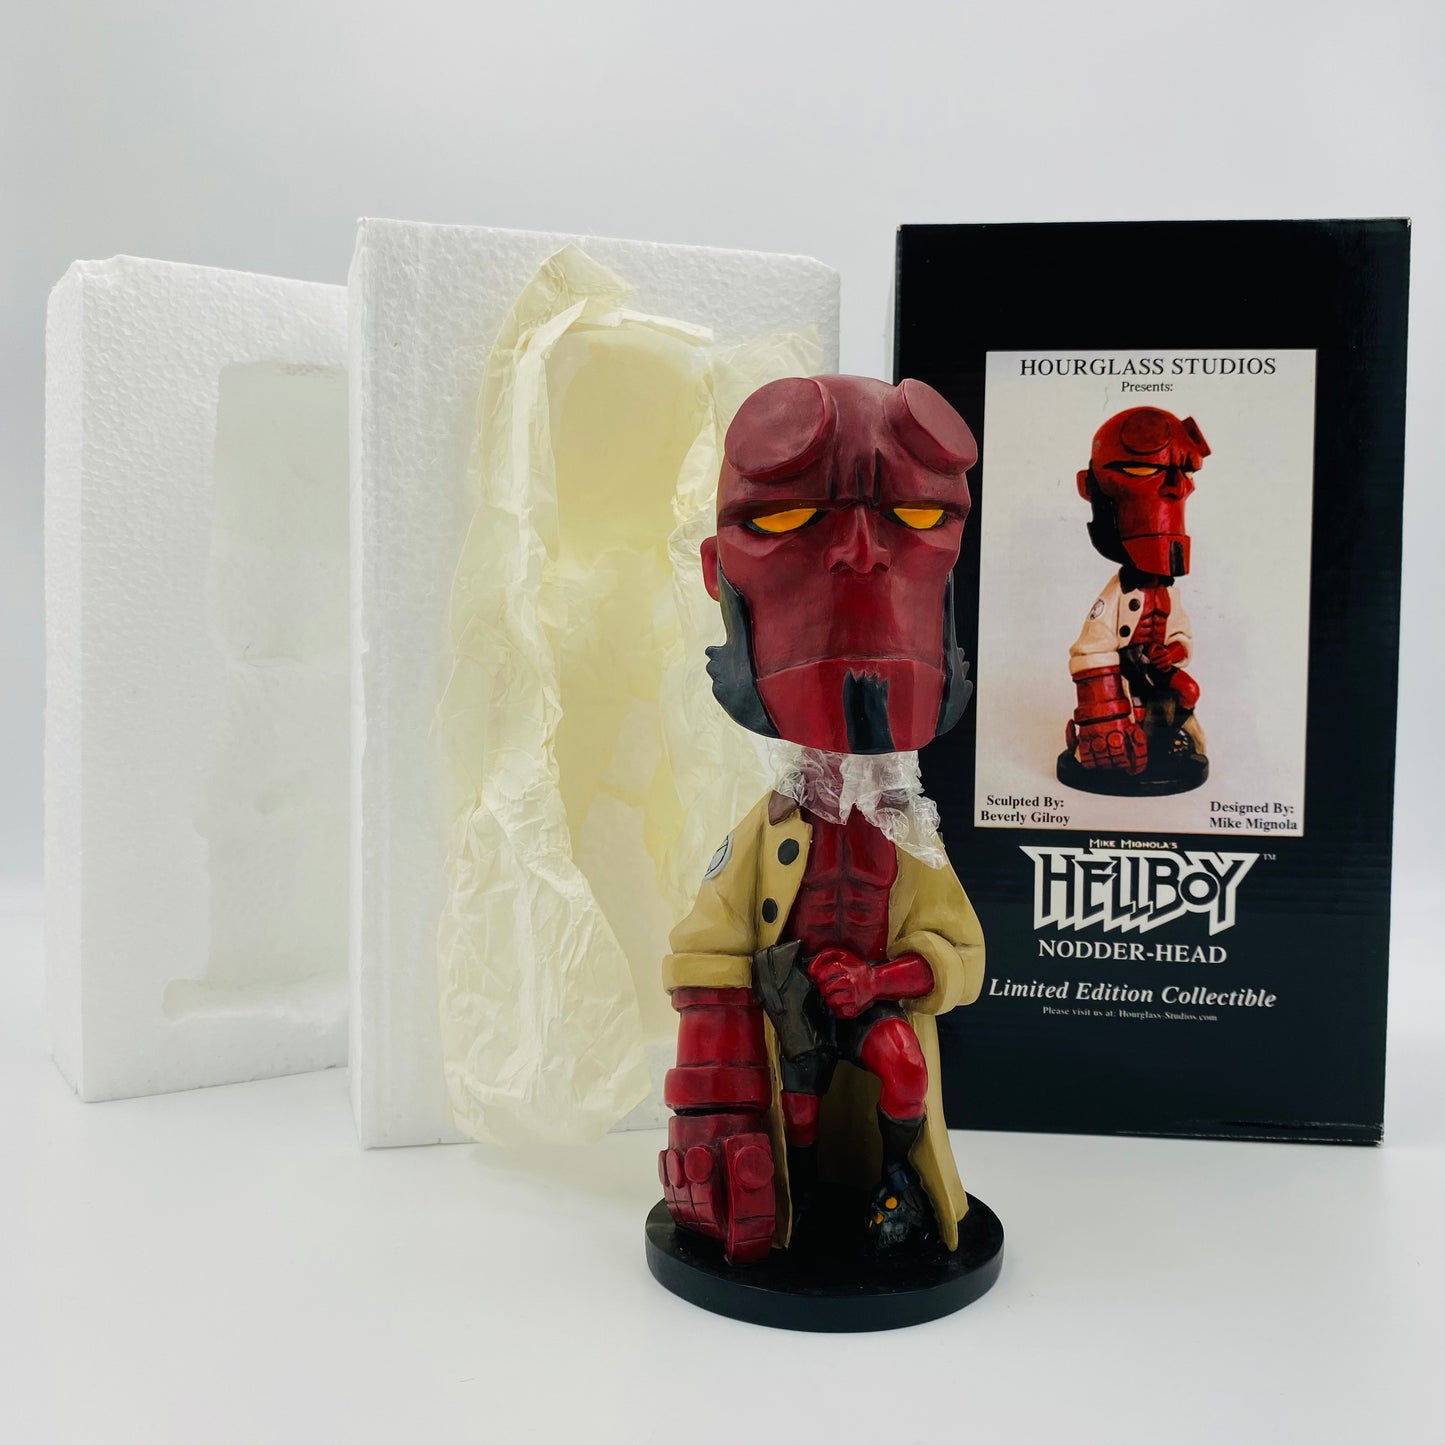 Nodder-Head Hellboy boxed 8" bobblehead (2001) Hourglass Studios